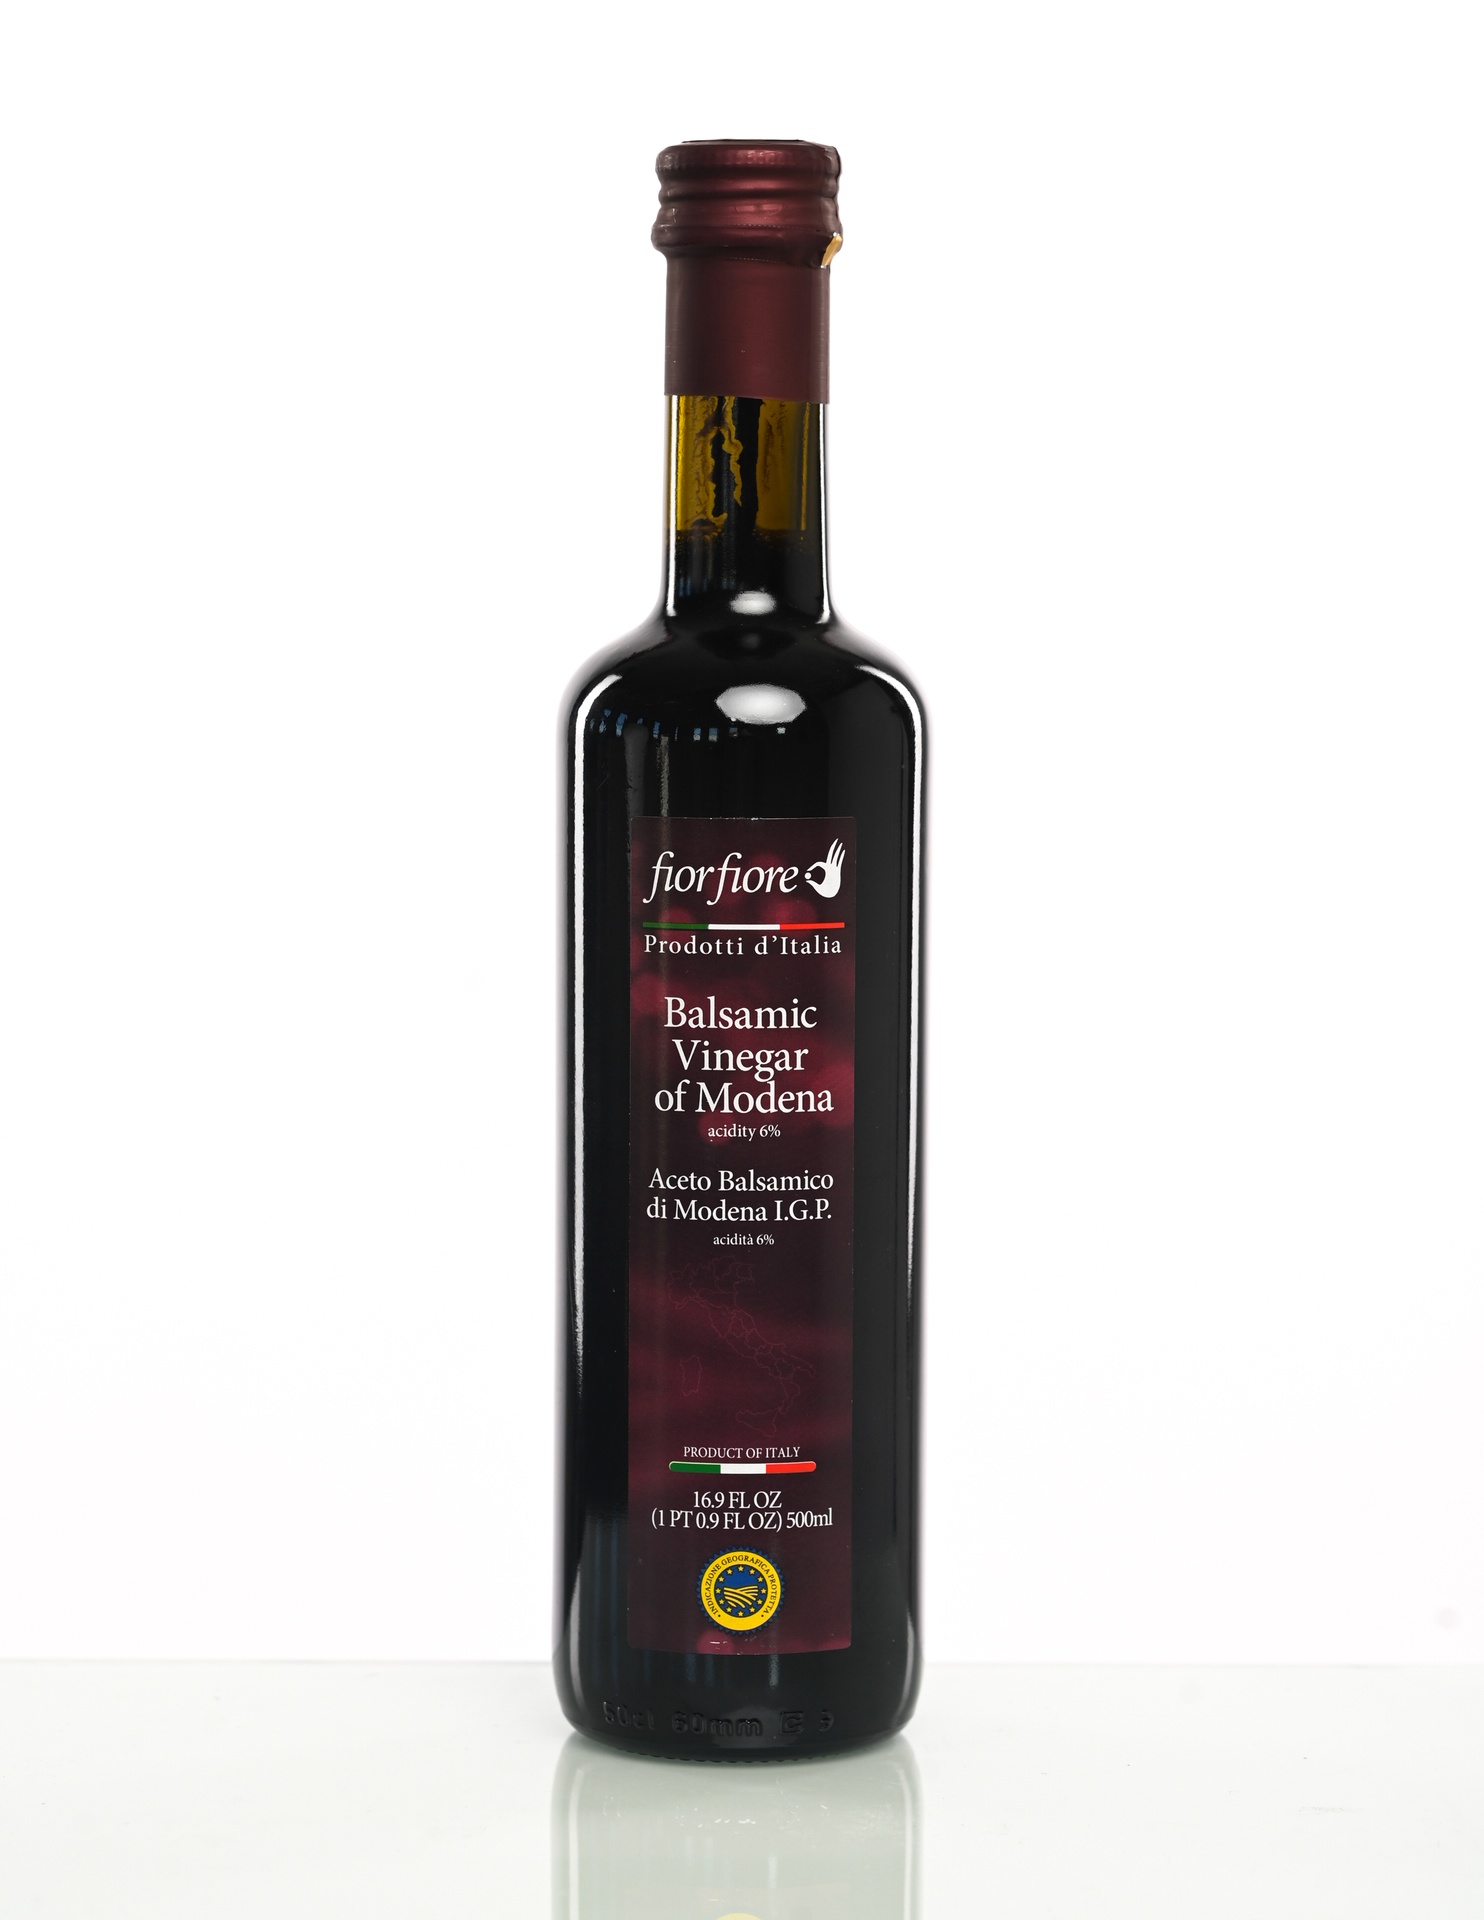 Fiorfiore Balsamic Vinegar of Modena, 16.9 oz